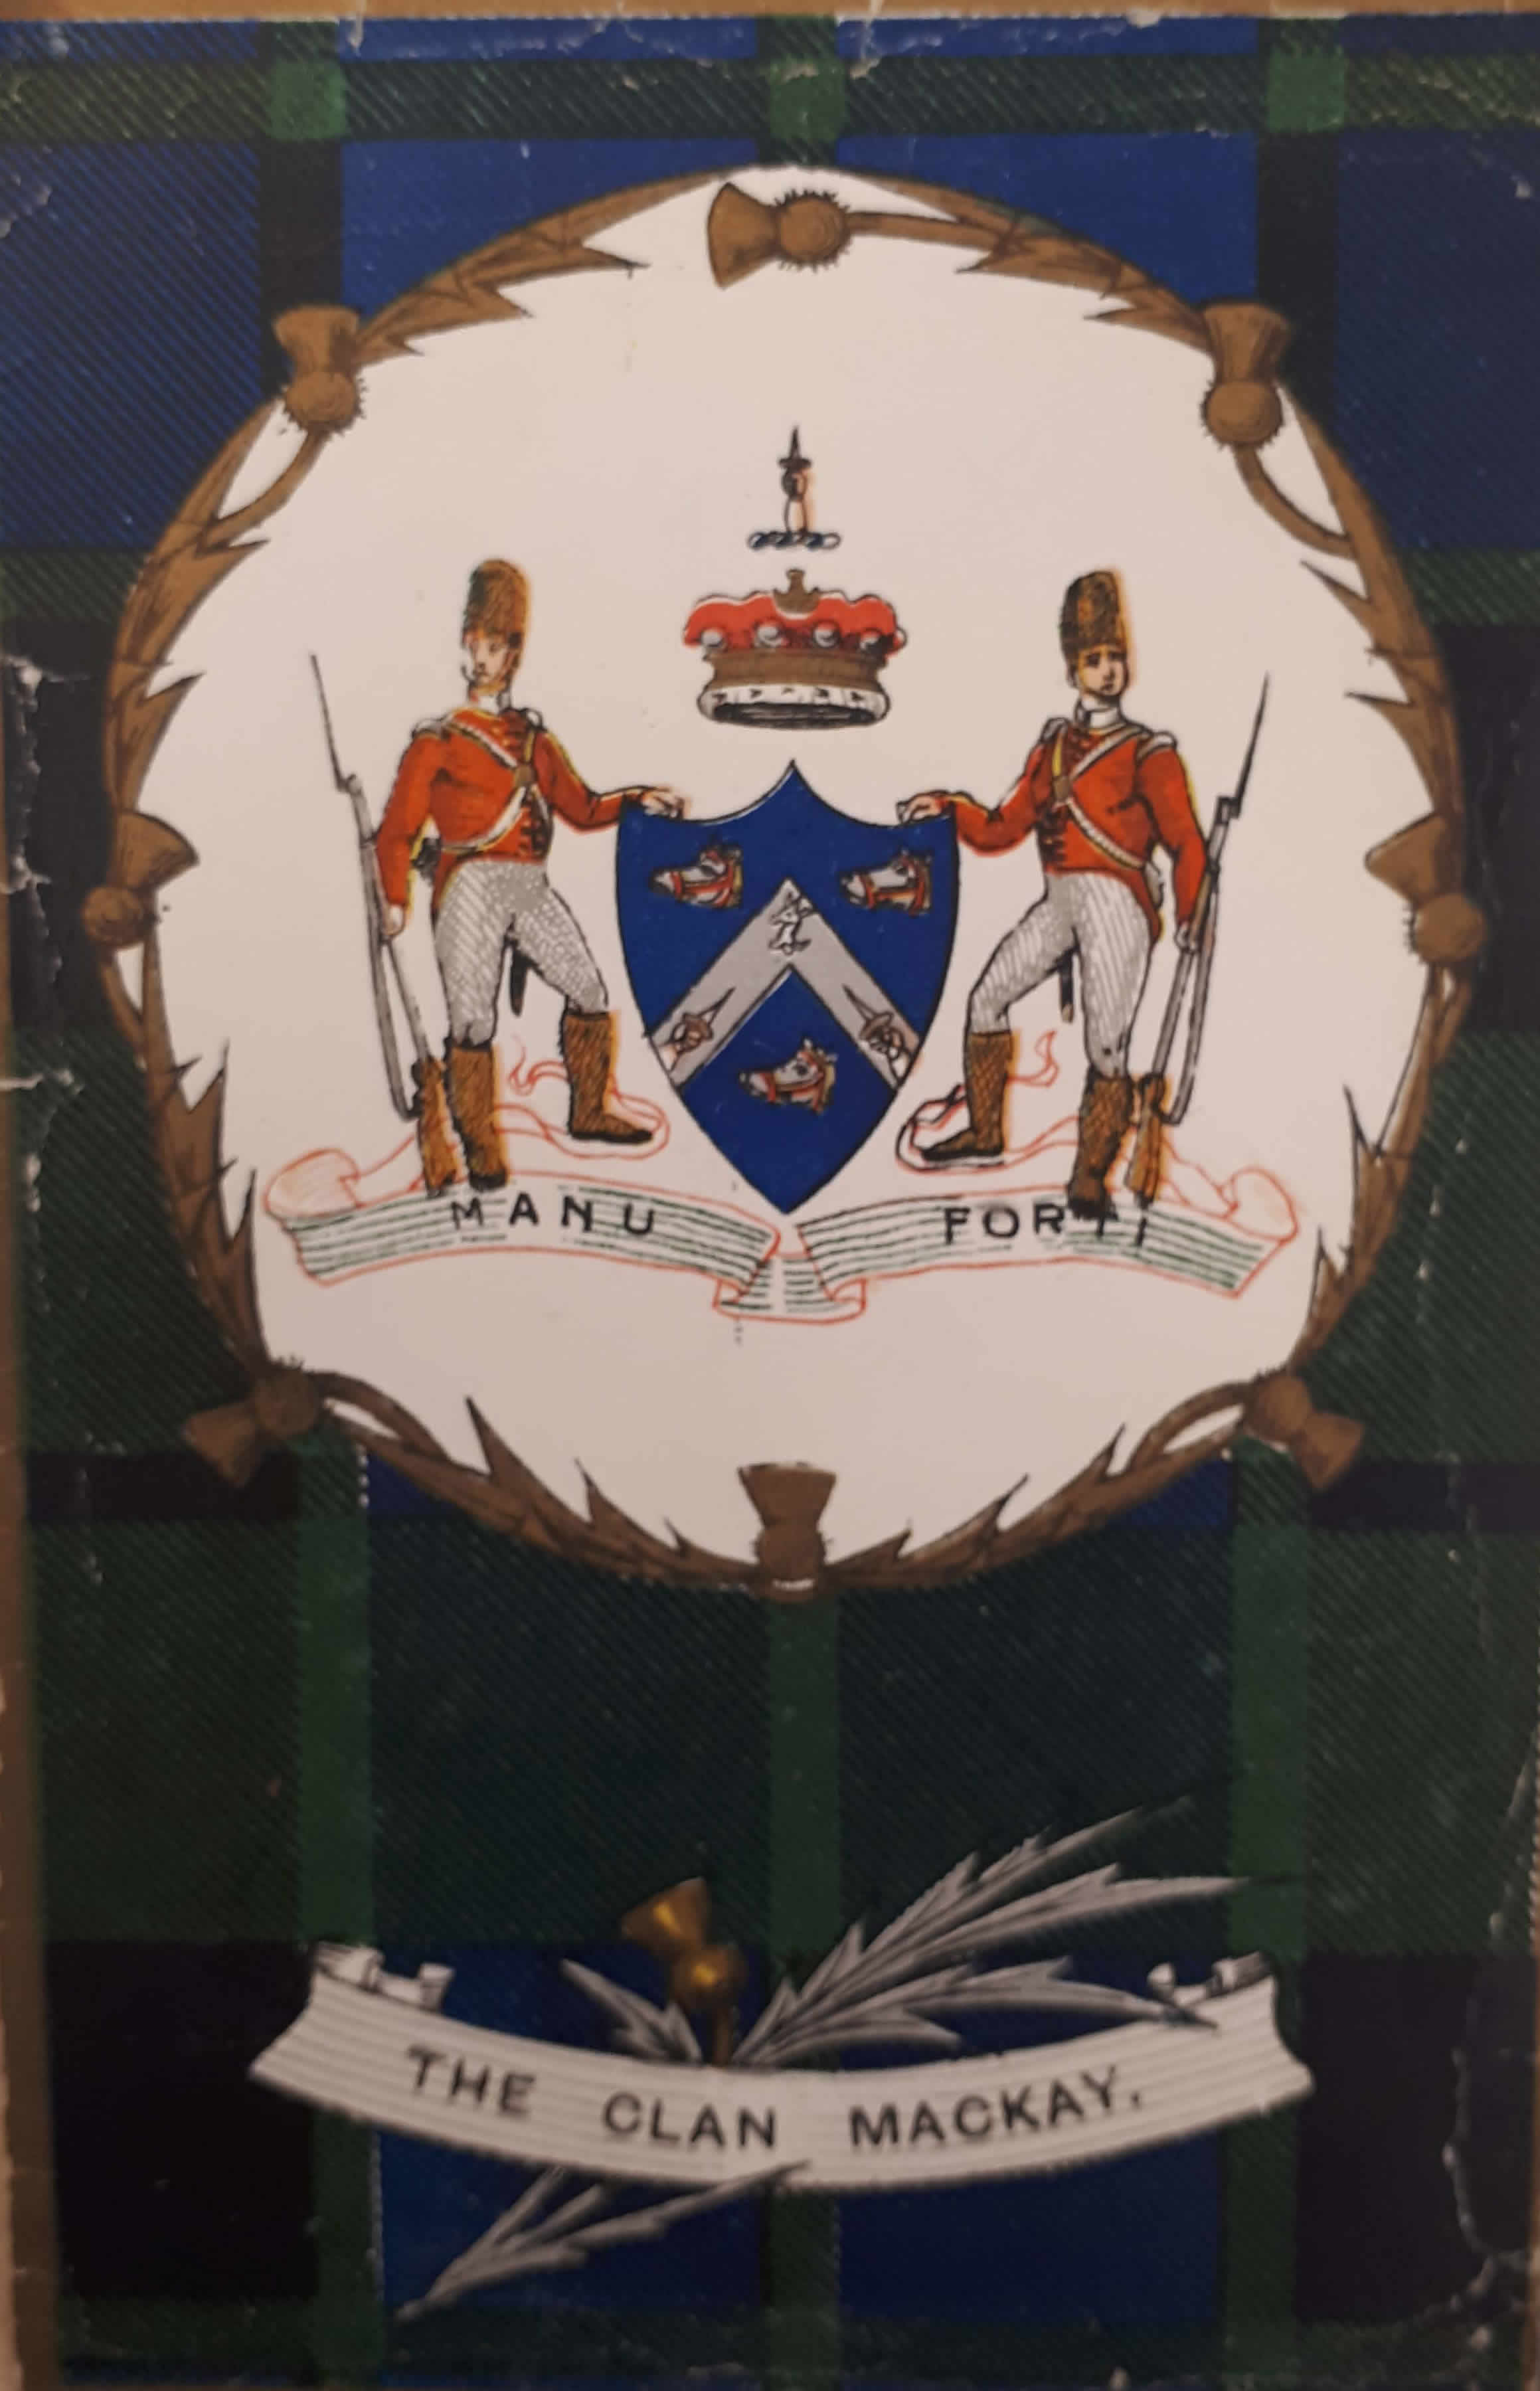 Emblem of the Clan Mackay